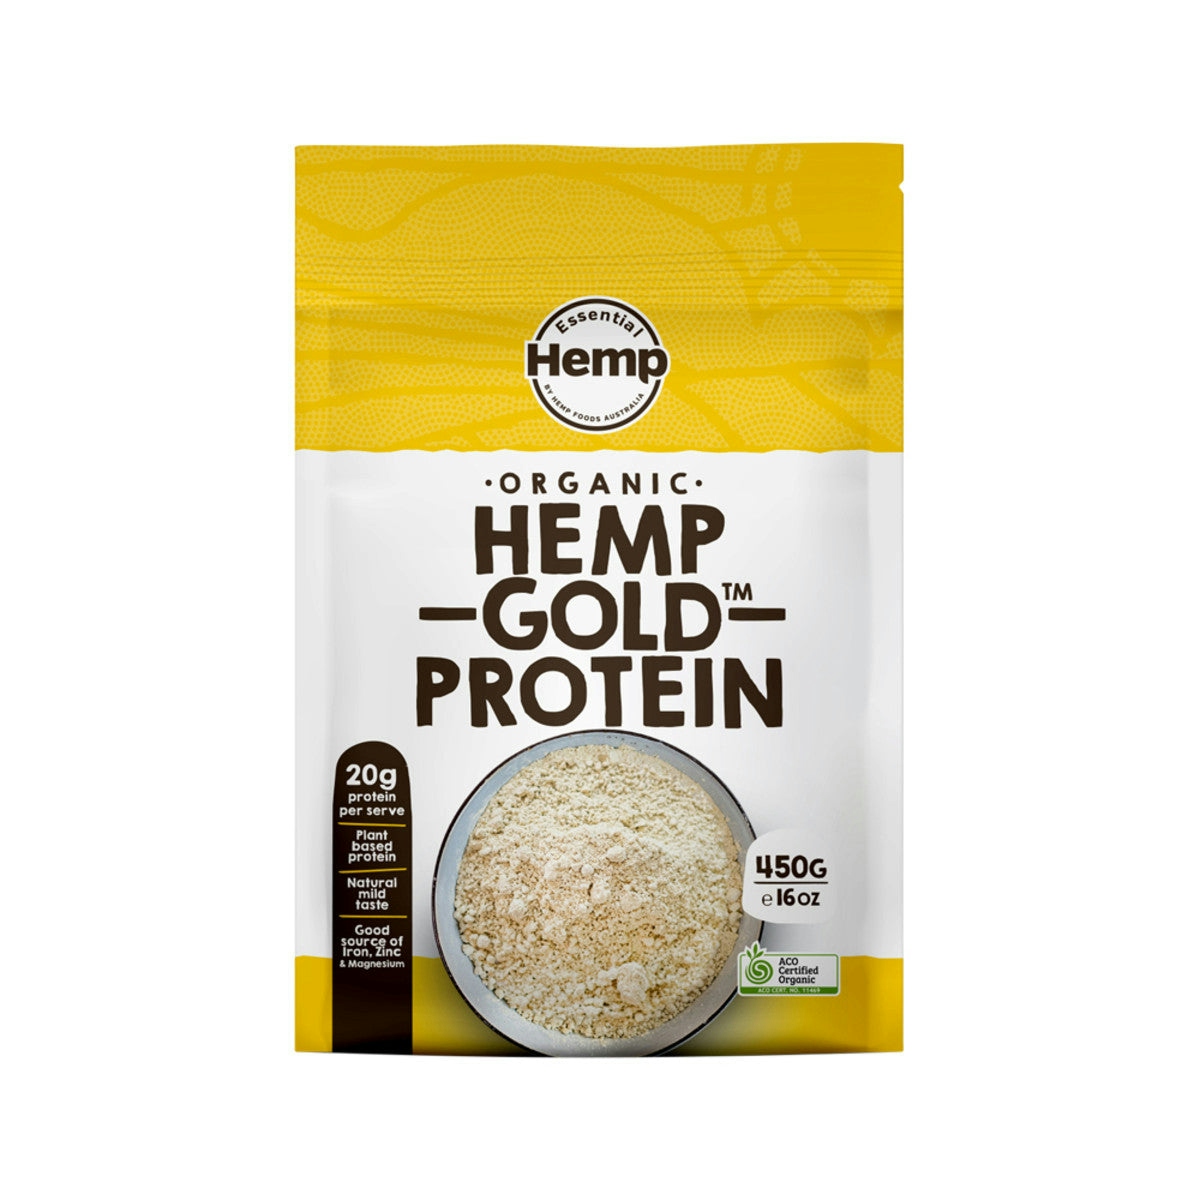 image of Essential Hemp Organic Hemp Protein Gold Powder 450g on white background 